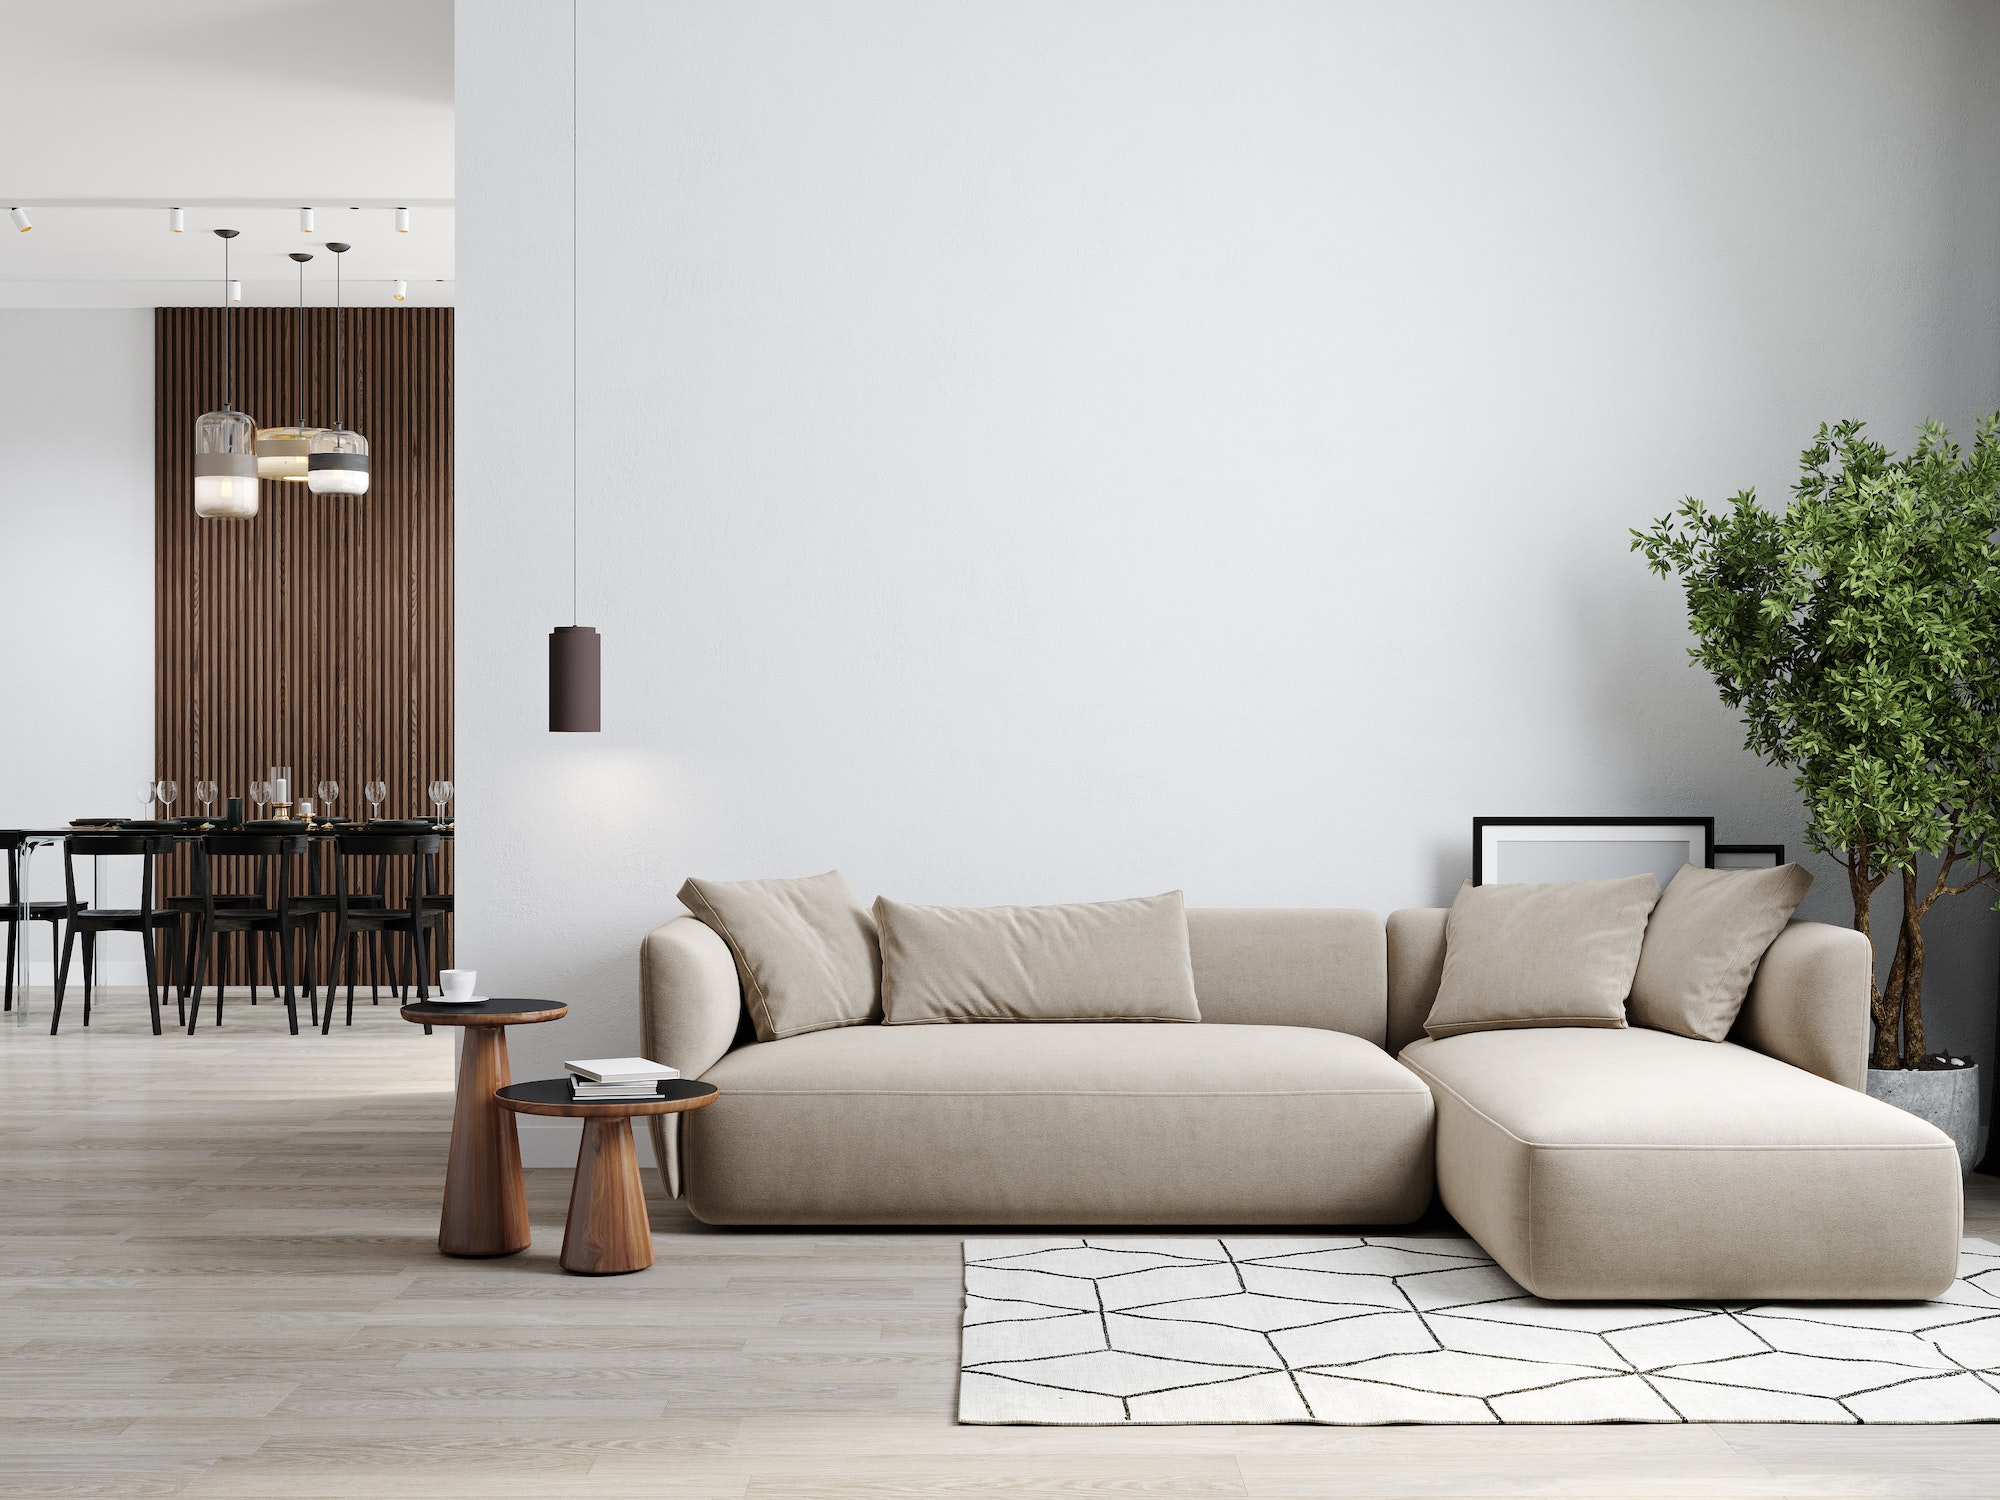 Minimalist modern living room interior background, living room mock up